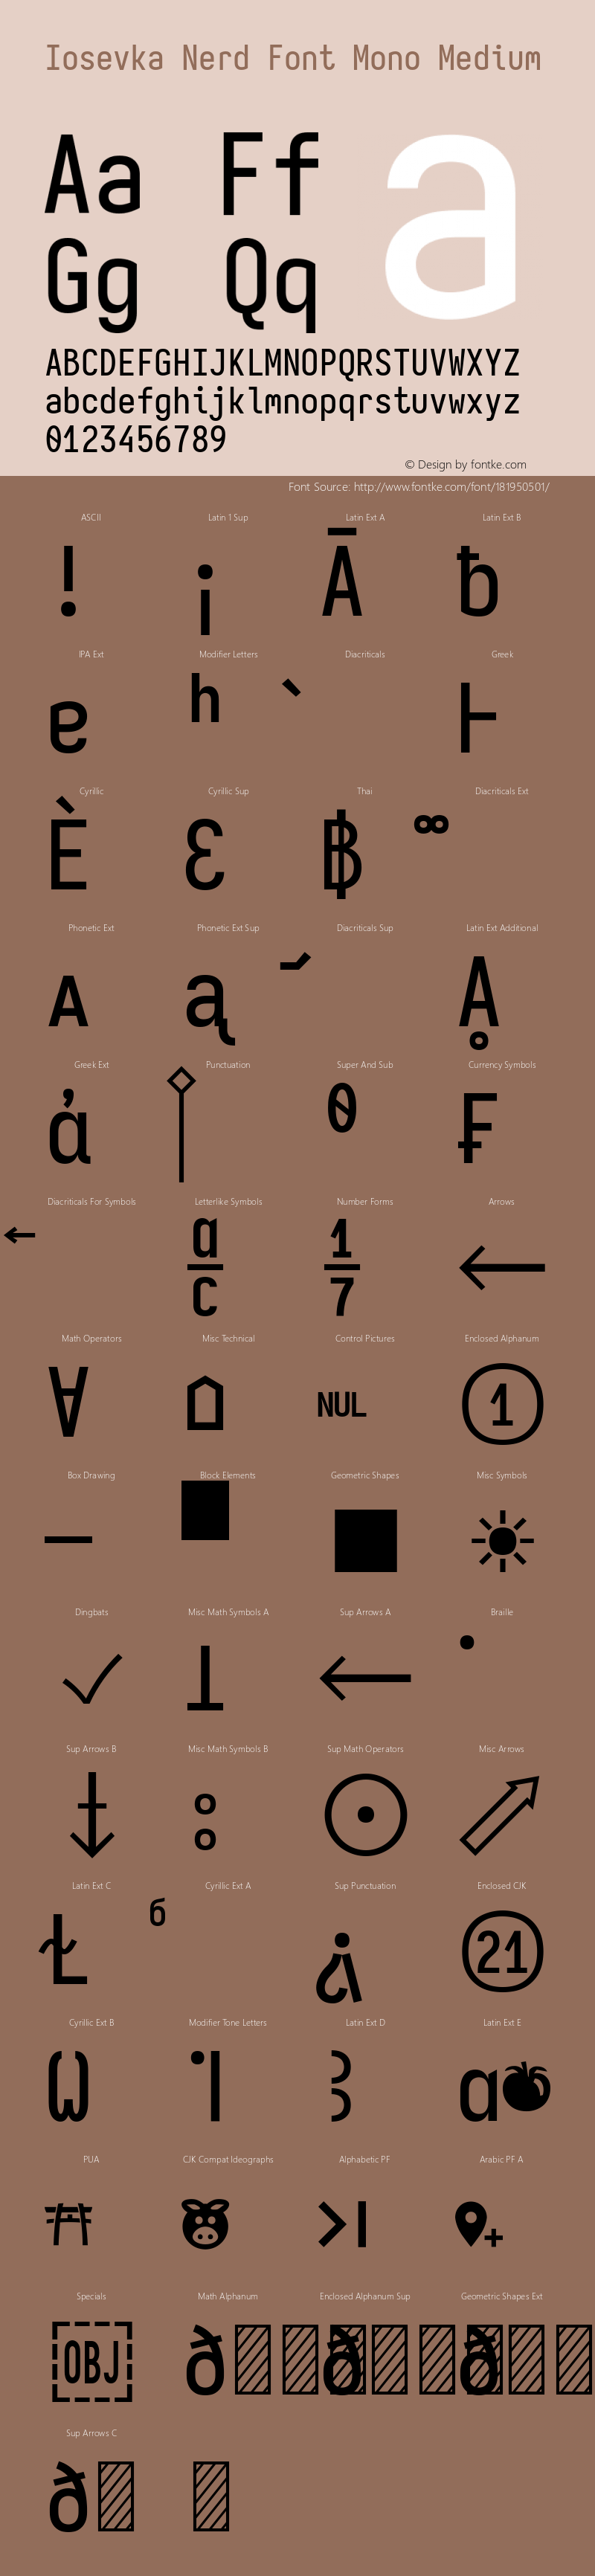 Iosevka Mayukai Serif Medium Nerd Font Complete Mono Version 10.3.4; ttfautohint (v1.8.4)图片样张